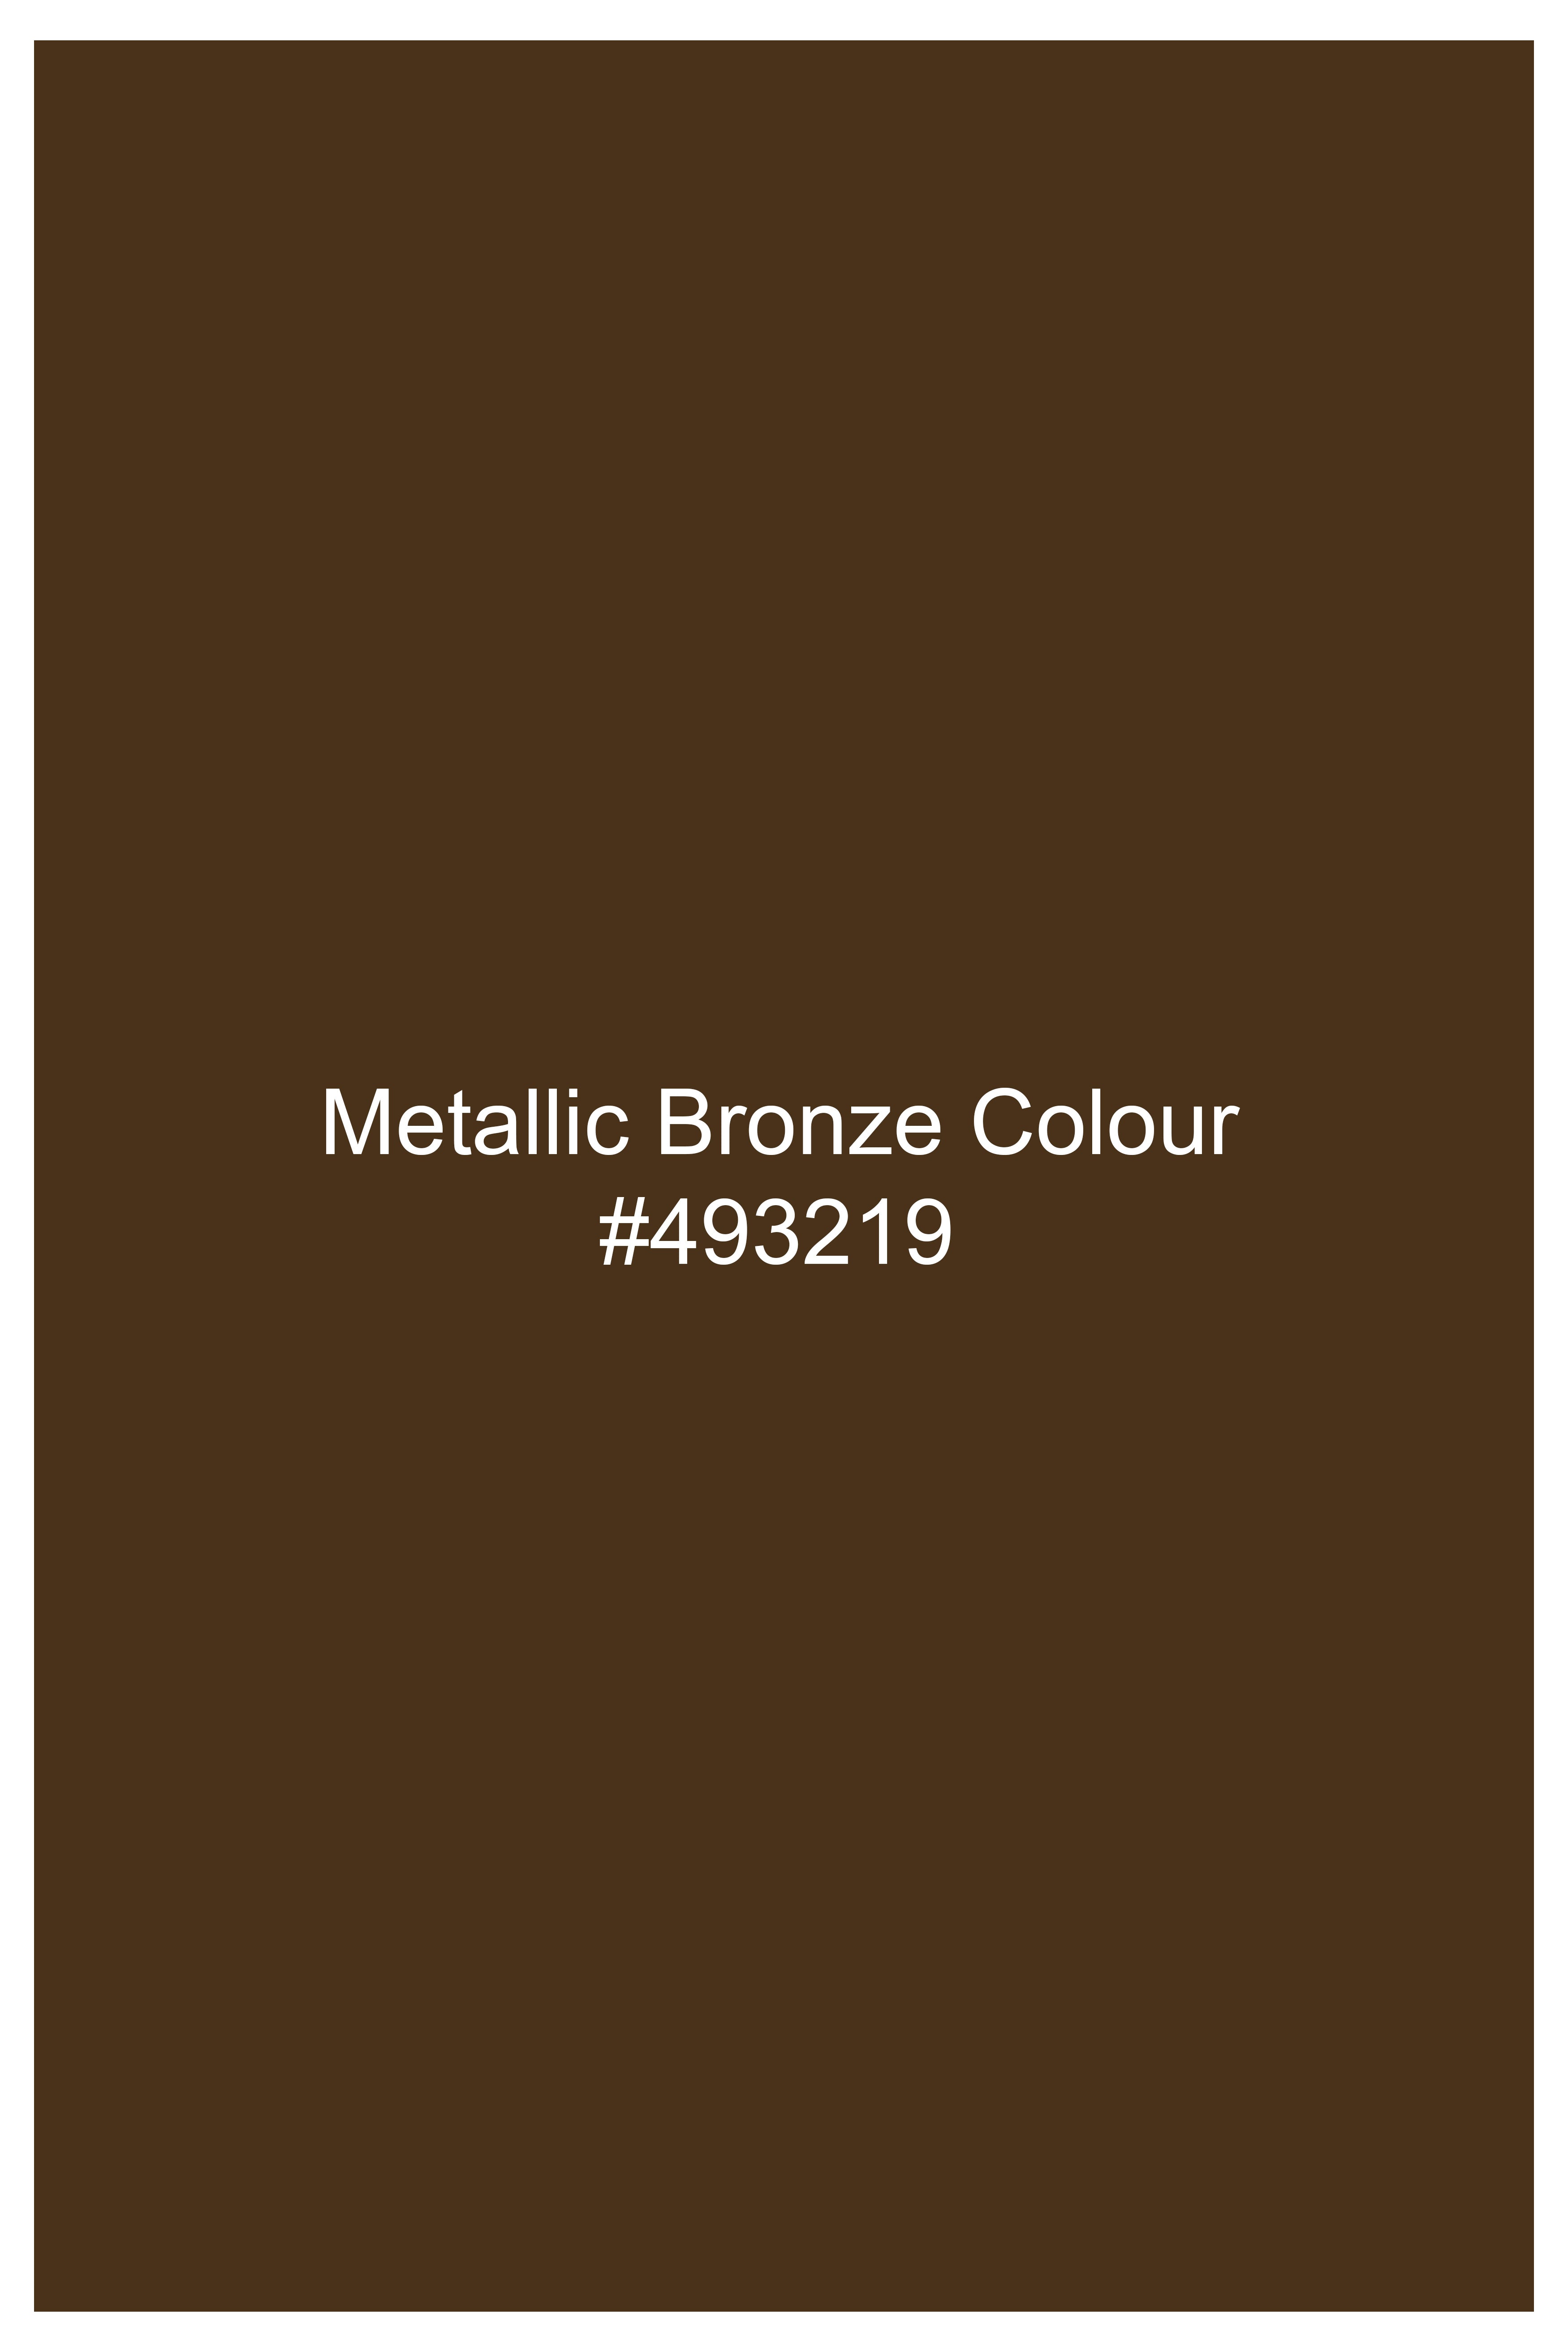 Metallic Bronze Brown Premium Cotton Bandhgala Stretchable traveler Suit ST2780-BG-36, ST2780-BG-38, ST2780-BG-40, ST2780-BG-42, ST2780-BG-44, ST2780-BG-46, ST2780-BG-48, ST2780-BG-50, ST2780-BG-52, ST2780-BG-54, ST2780-BG-56, ST2780-BG-58, ST2780-BG-60